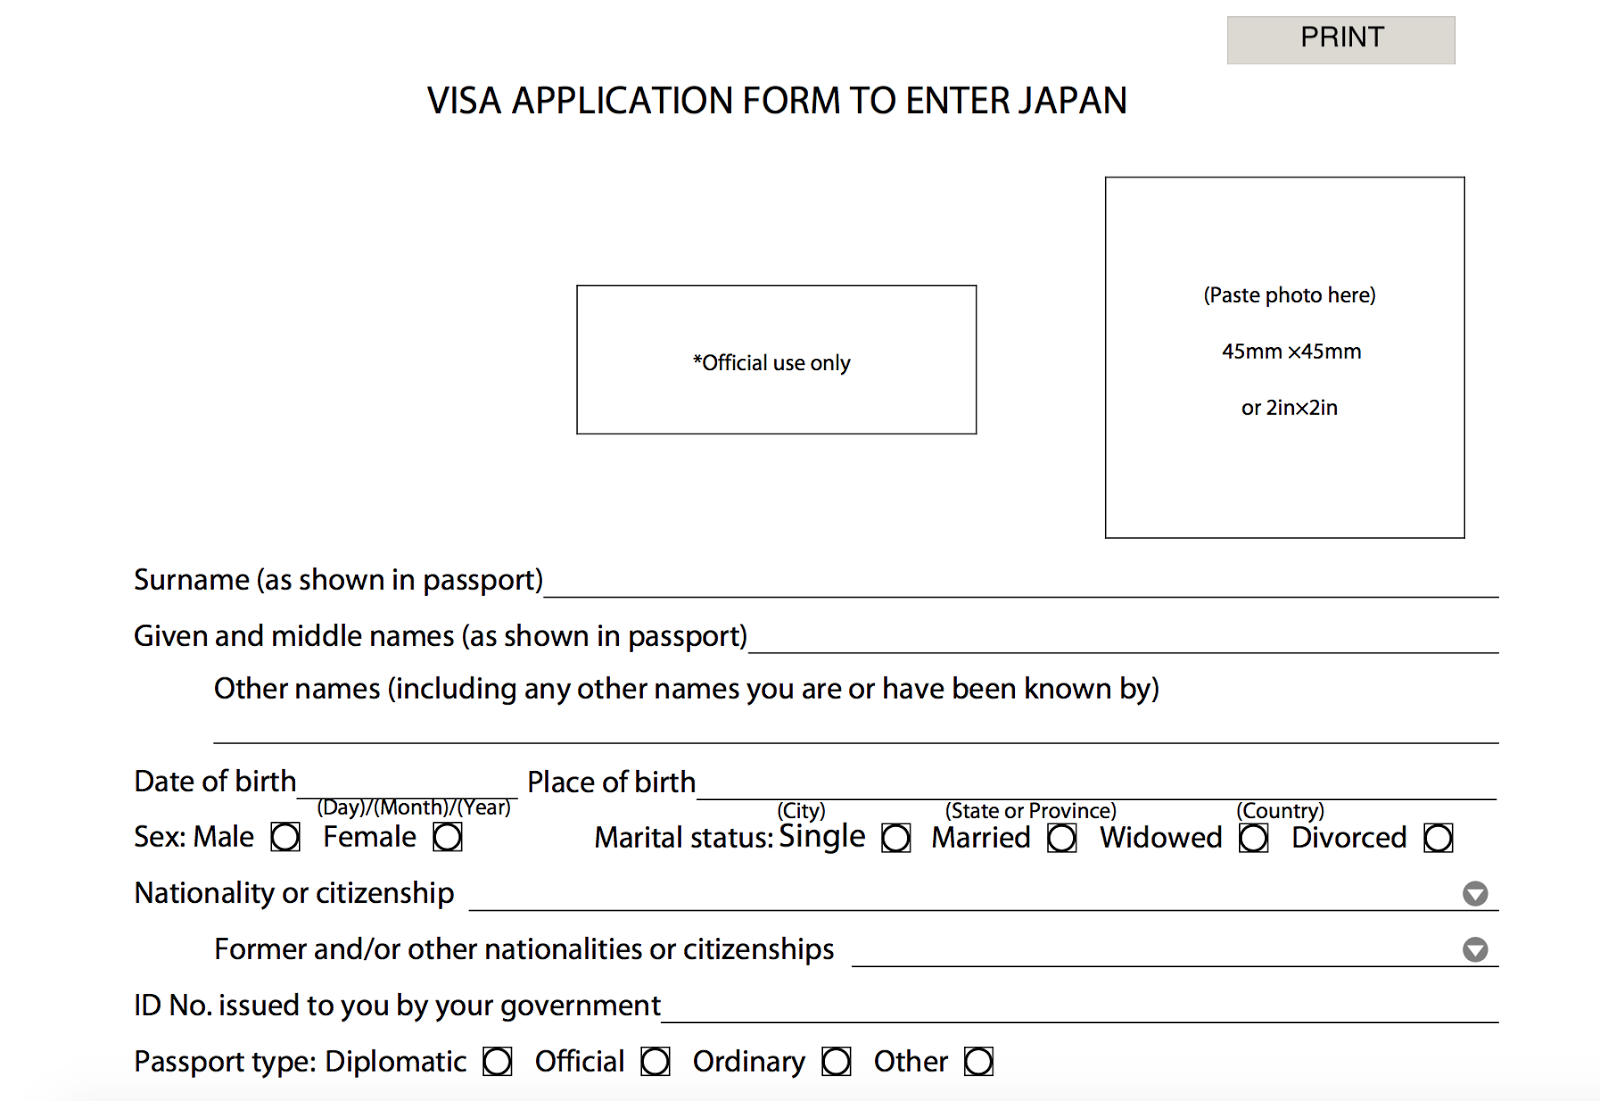 how do i hand in passport photos for visa application